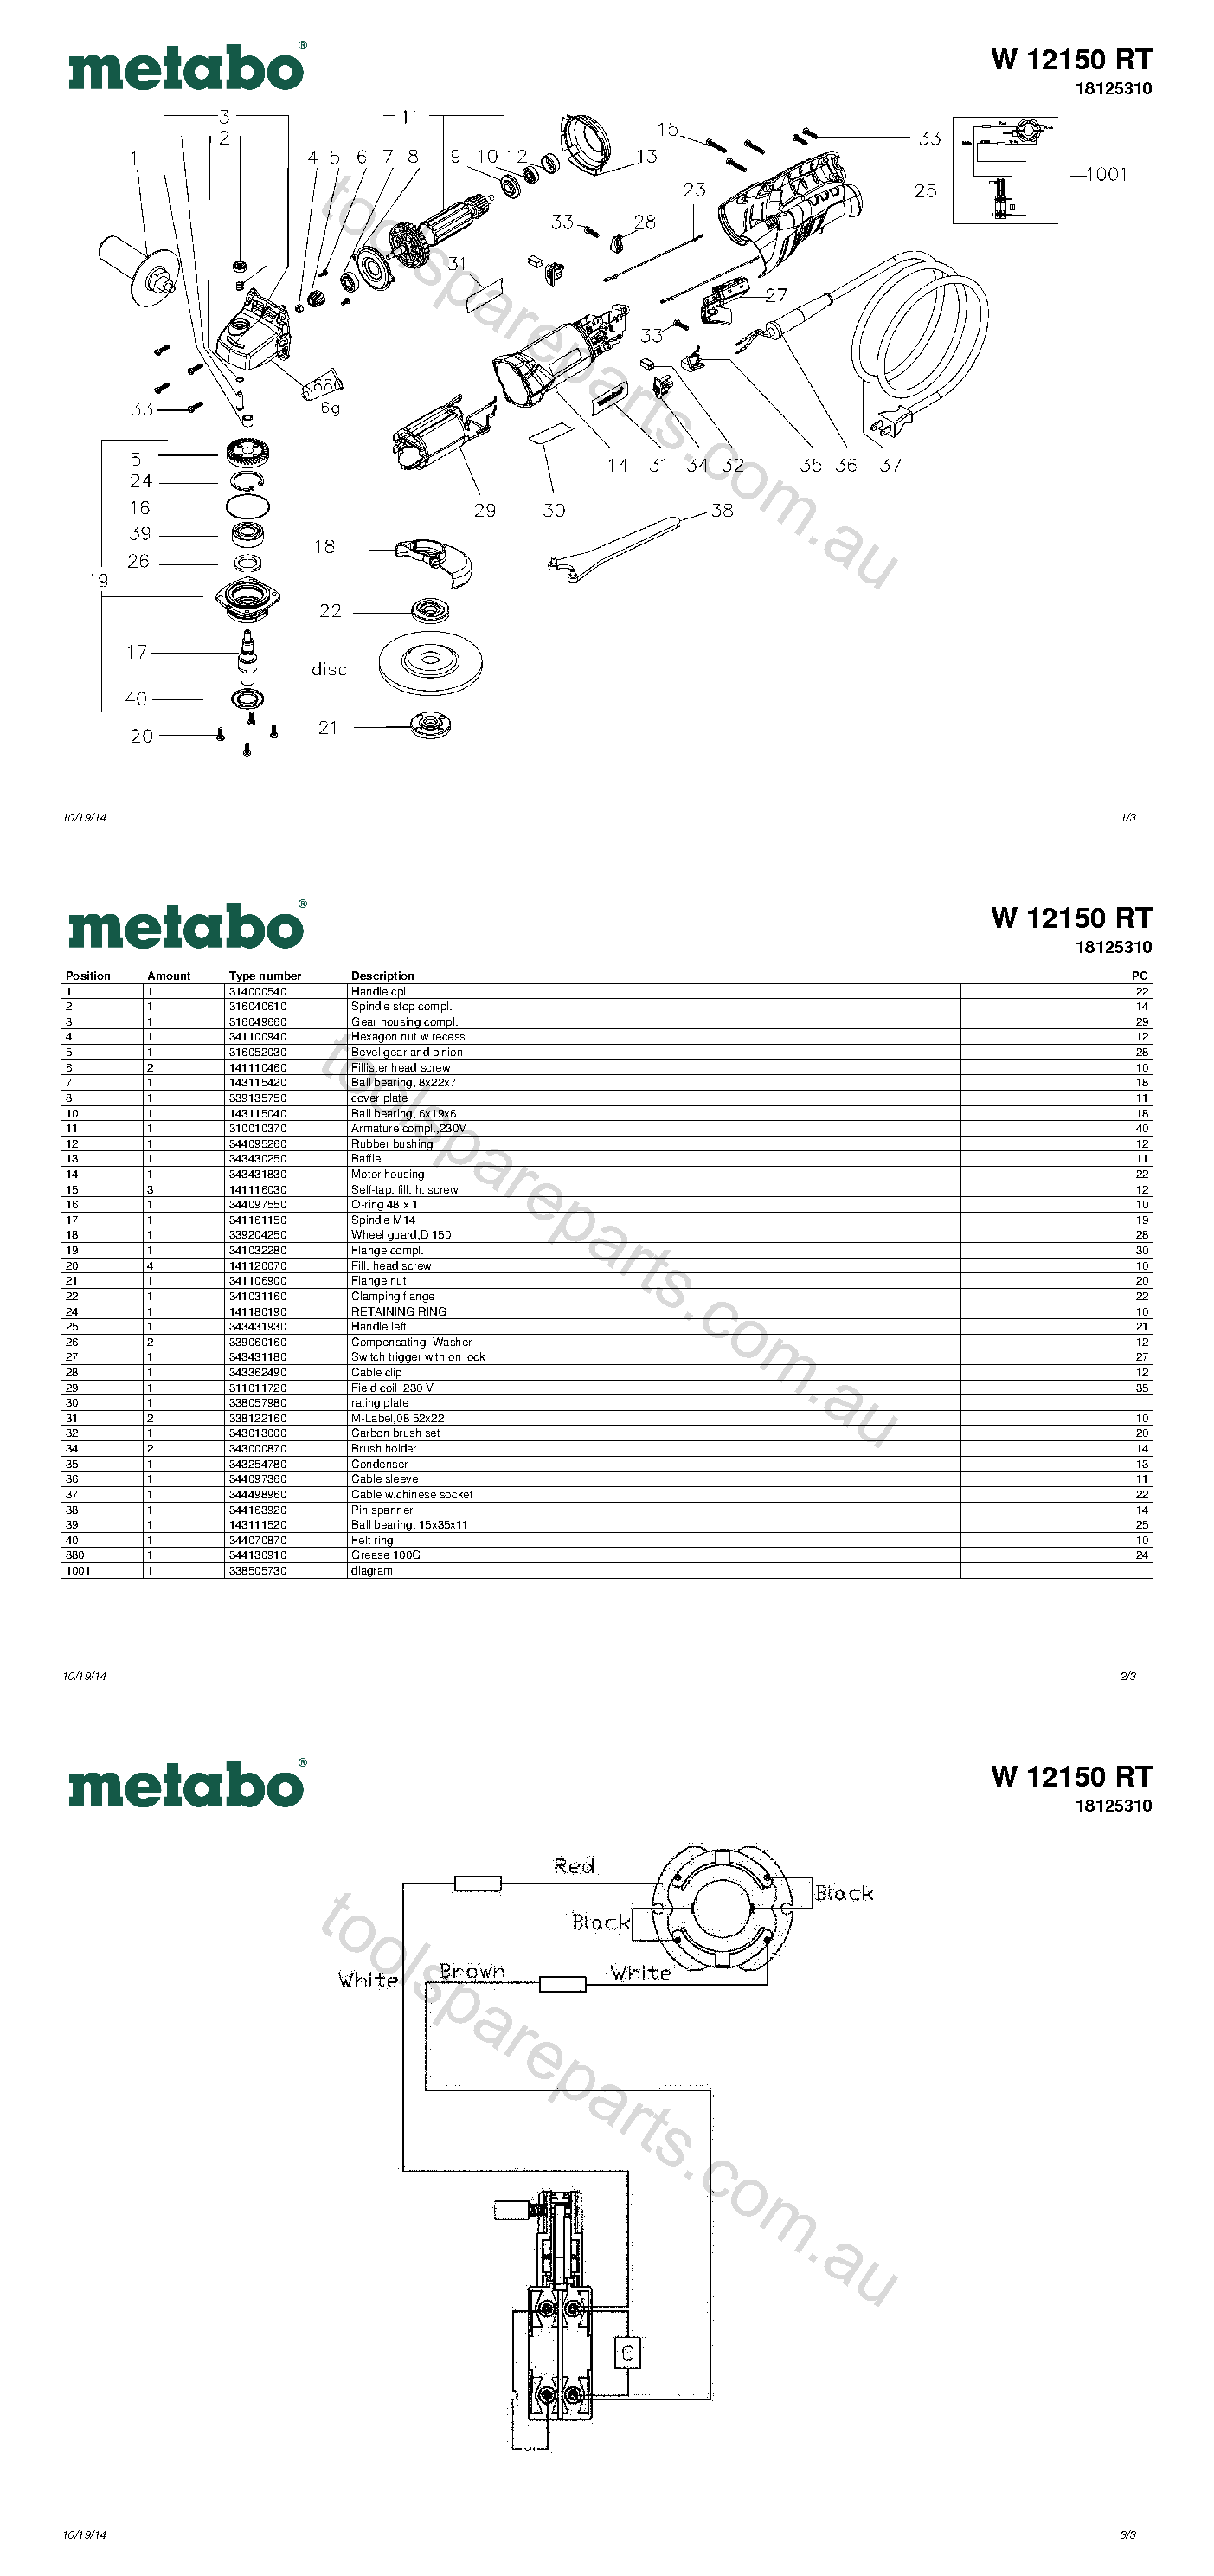 Metabo W 12150 RT 18125310  Diagram 1